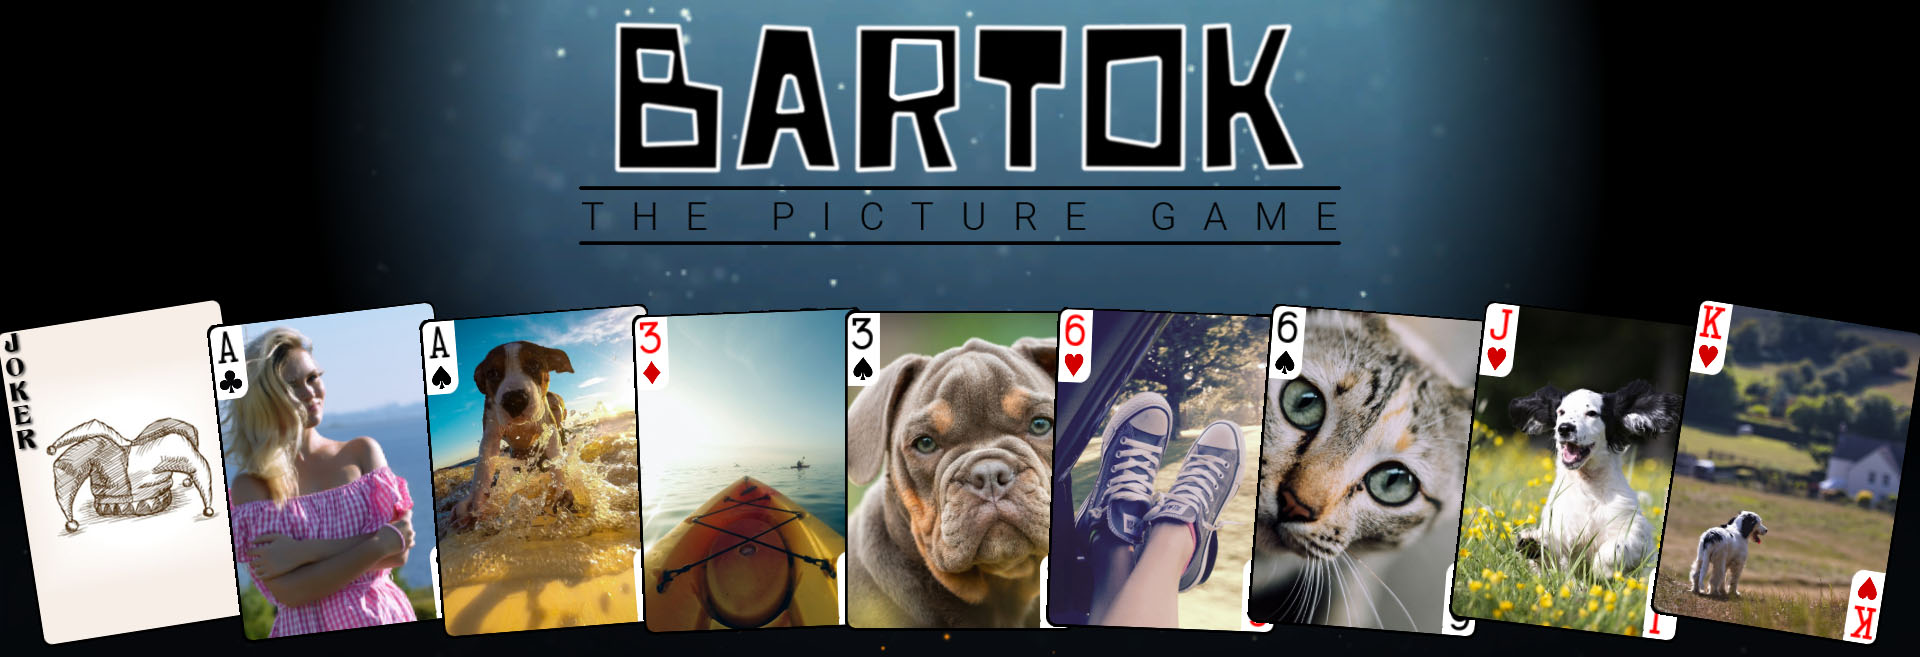 Bartok - Pets And Cute Animals